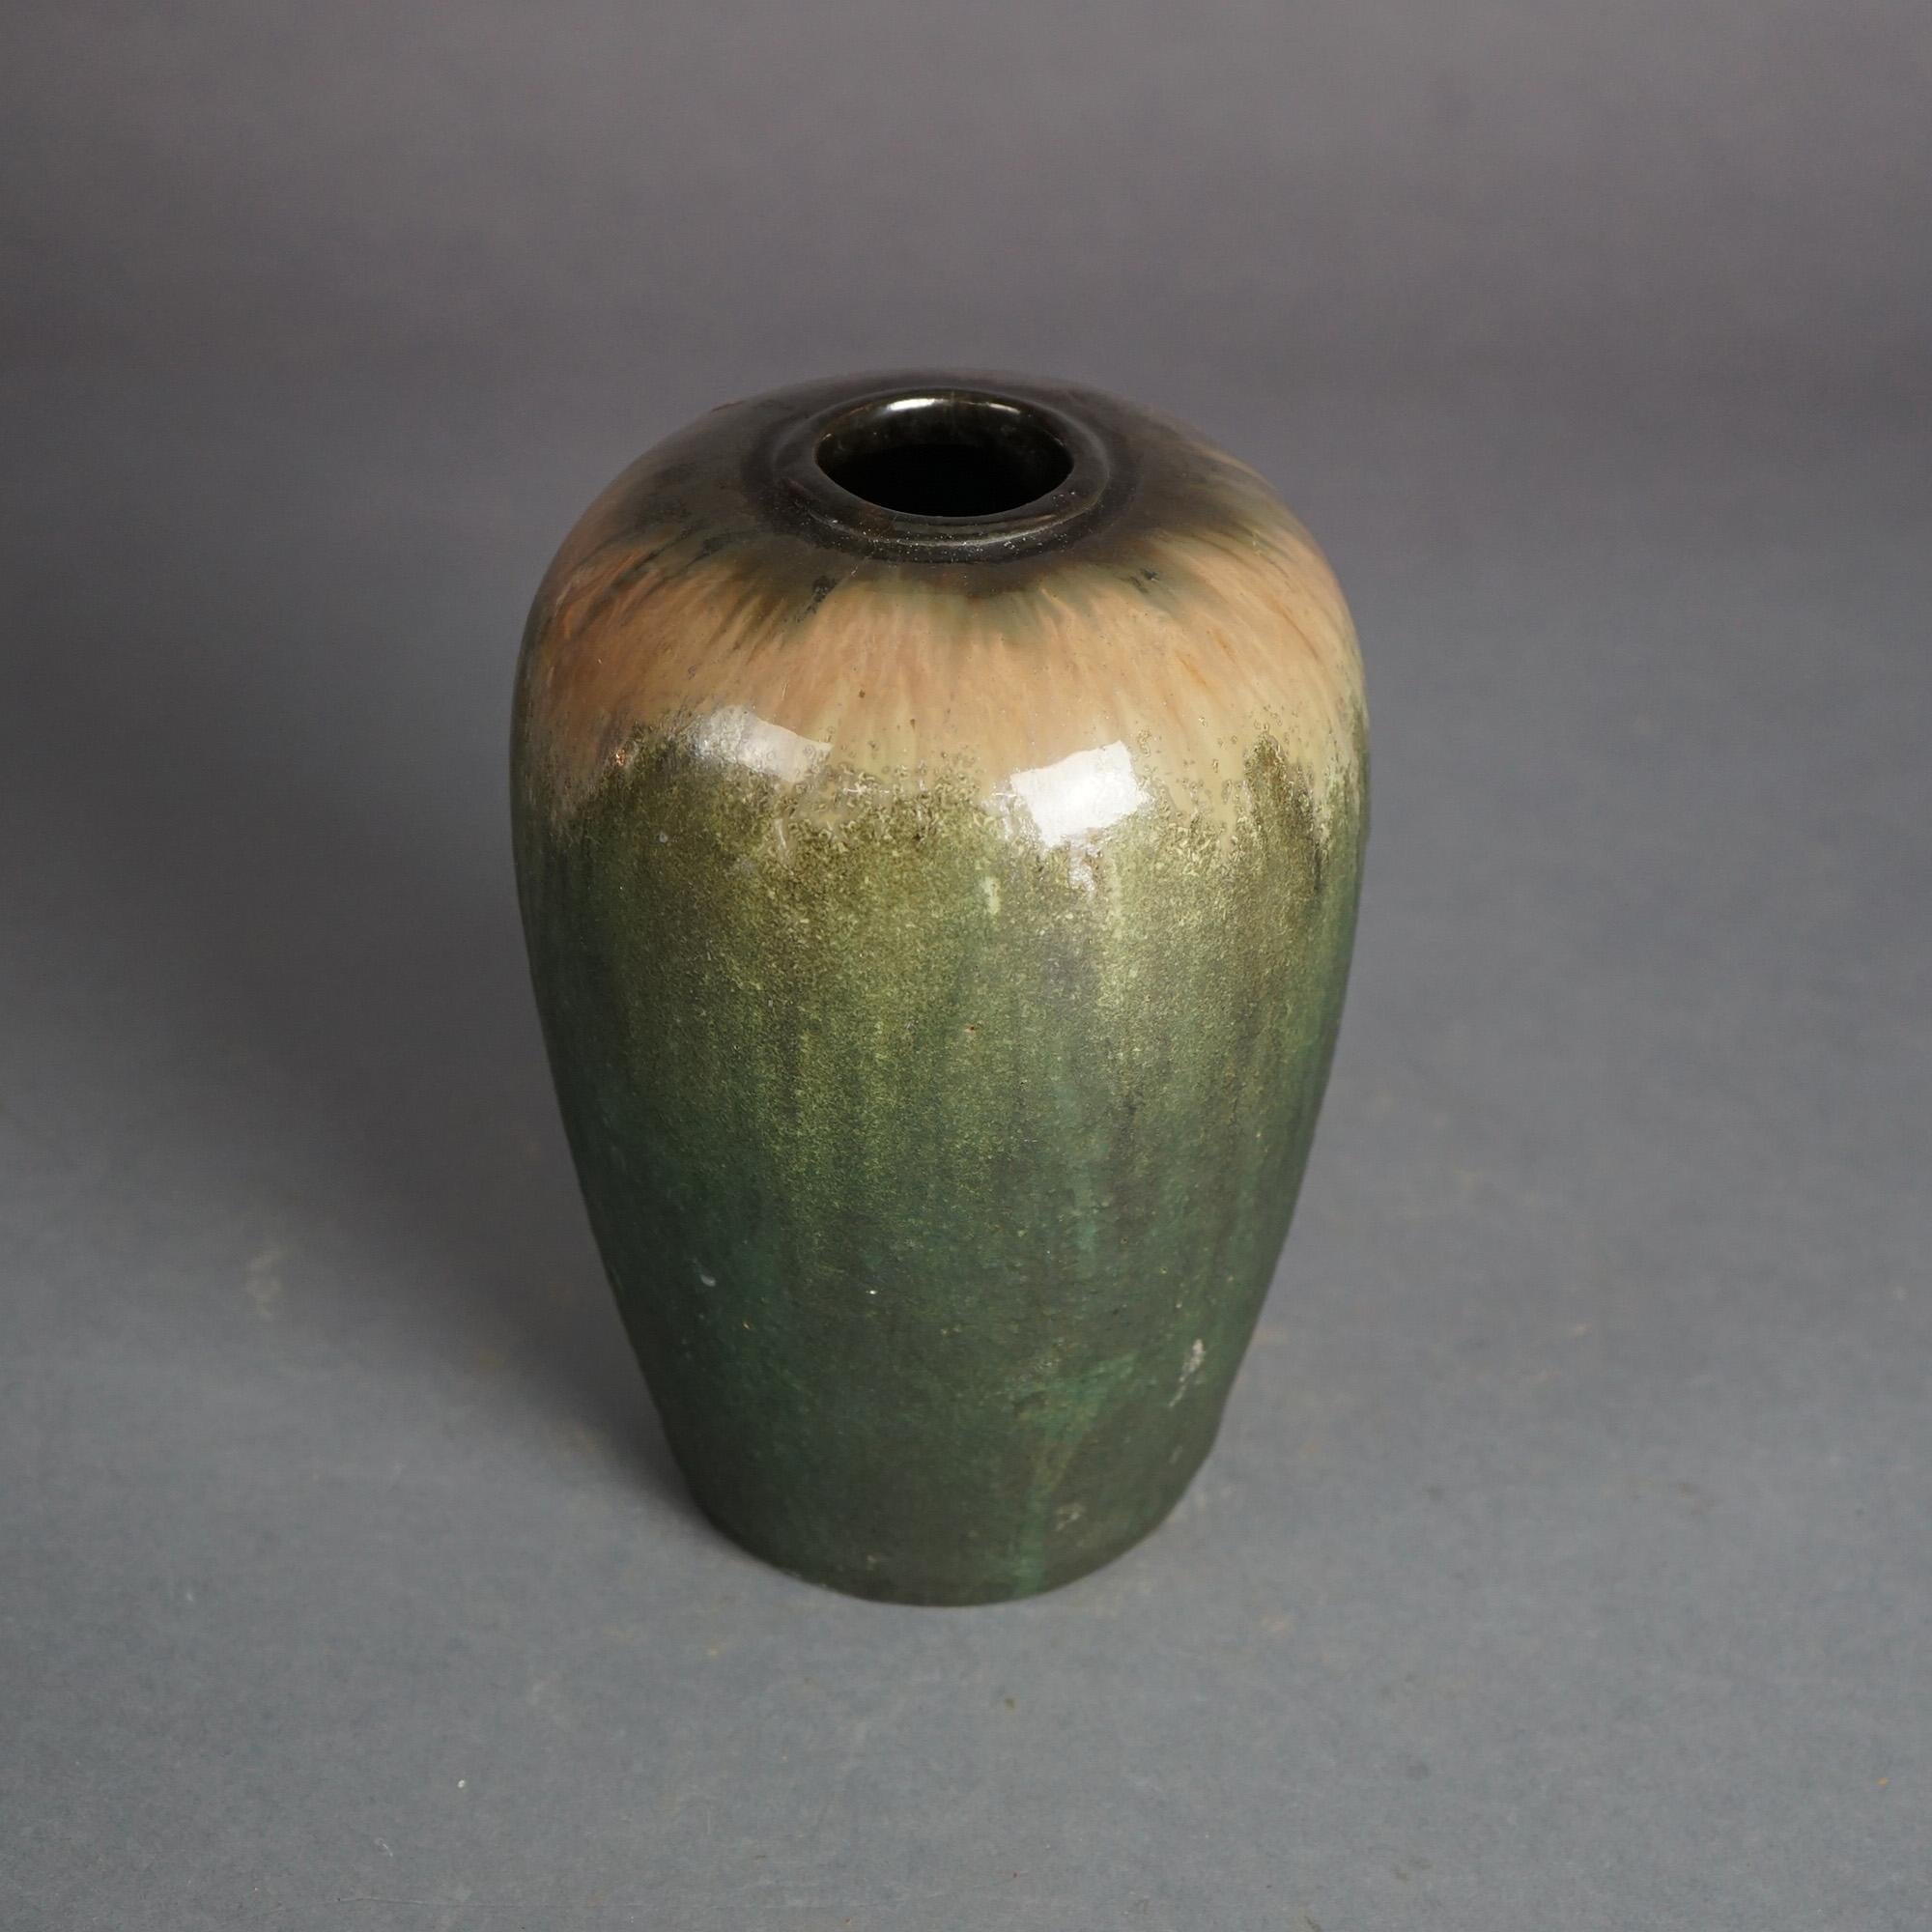 Antique Fulper for Prang Arts & Crafts Pottery Vase C1920

Measures- 8''H x 5.5''W x 5.5''D
